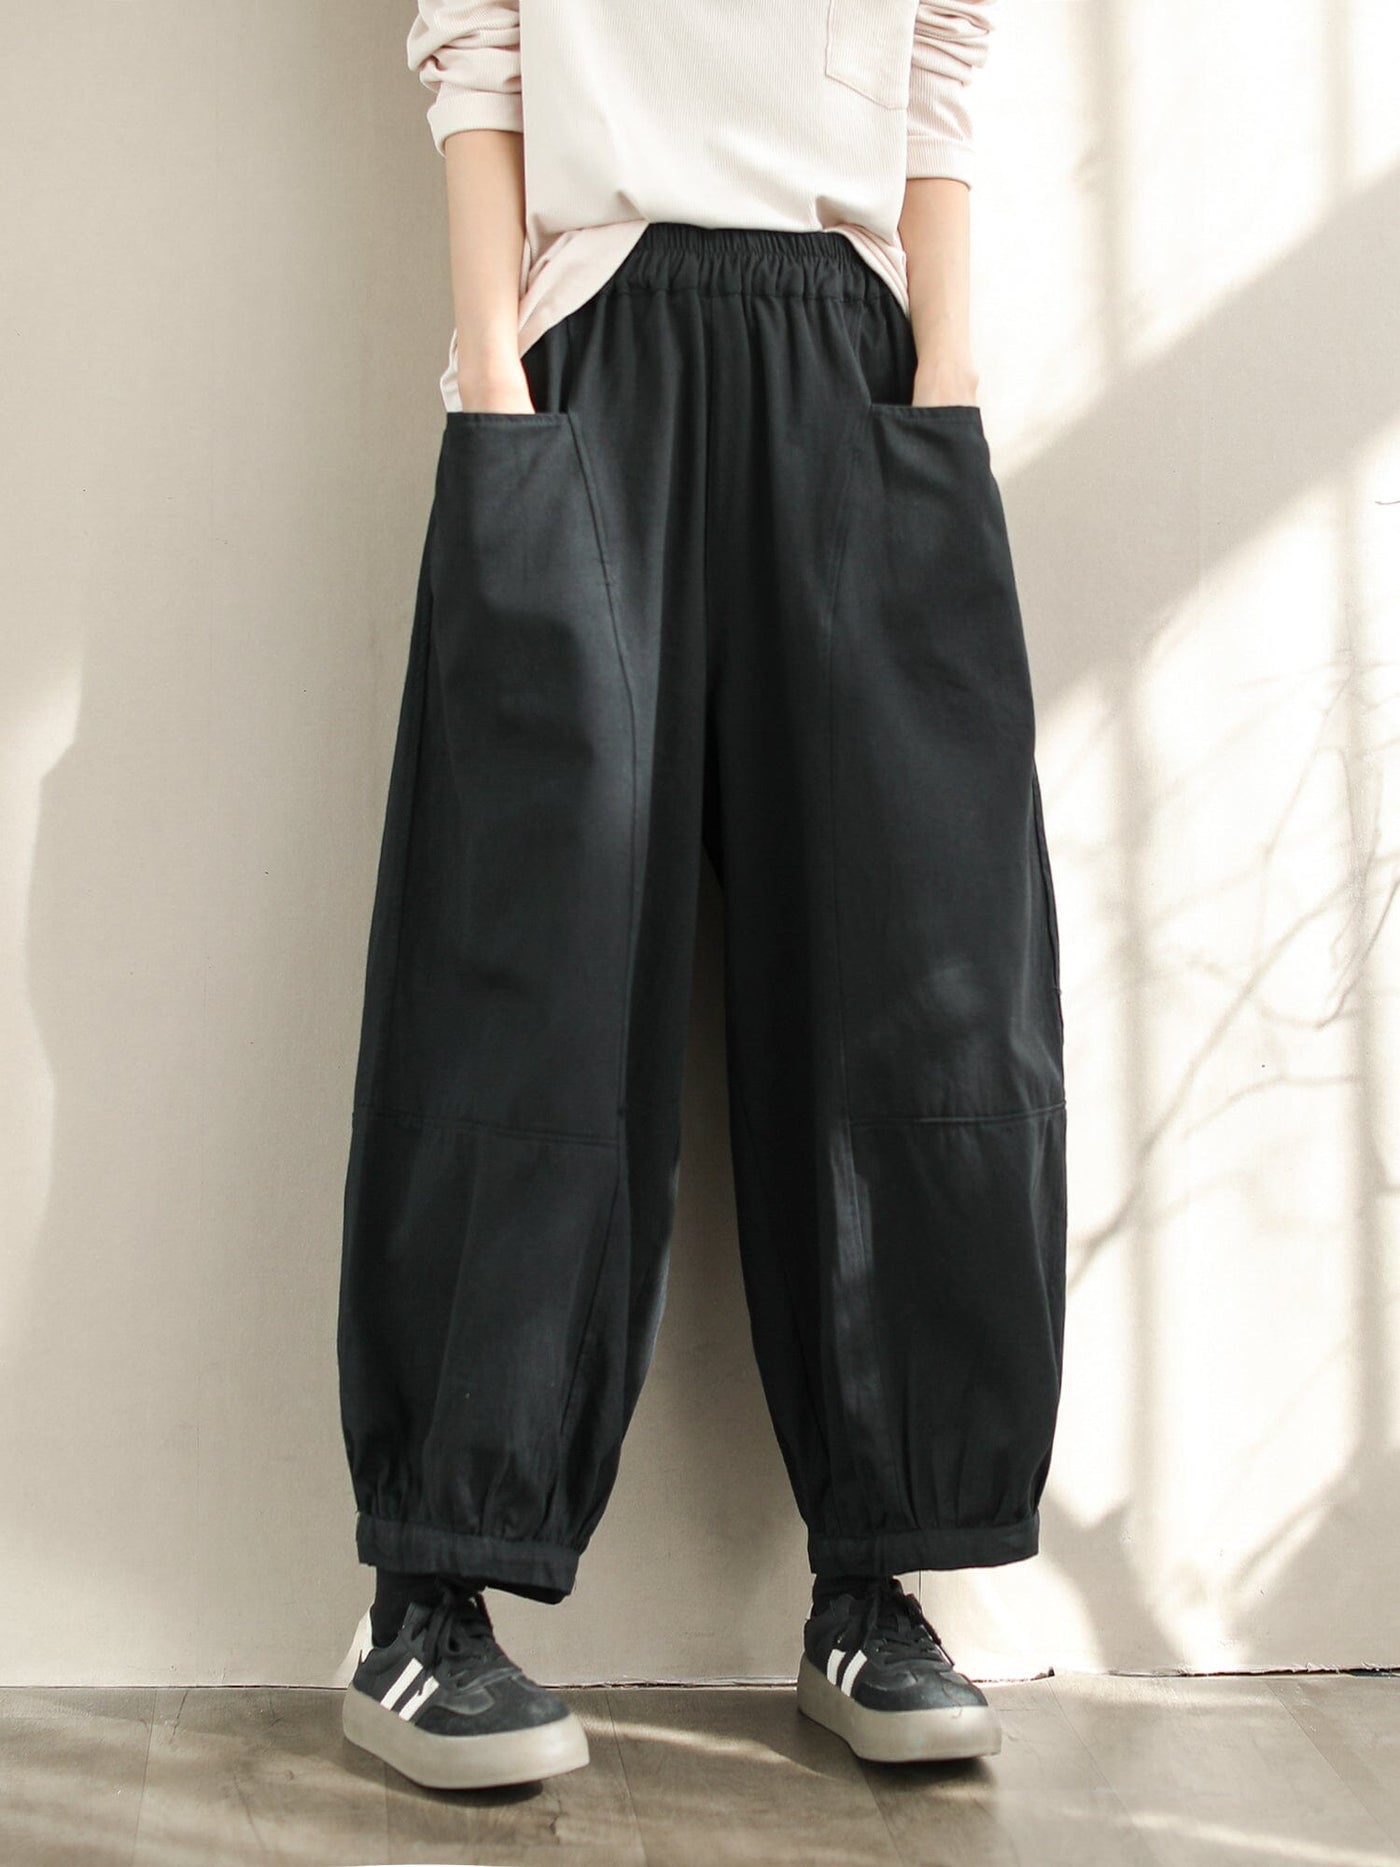 Women Spring Minimalist Solid Casual Cotton Harem Pants